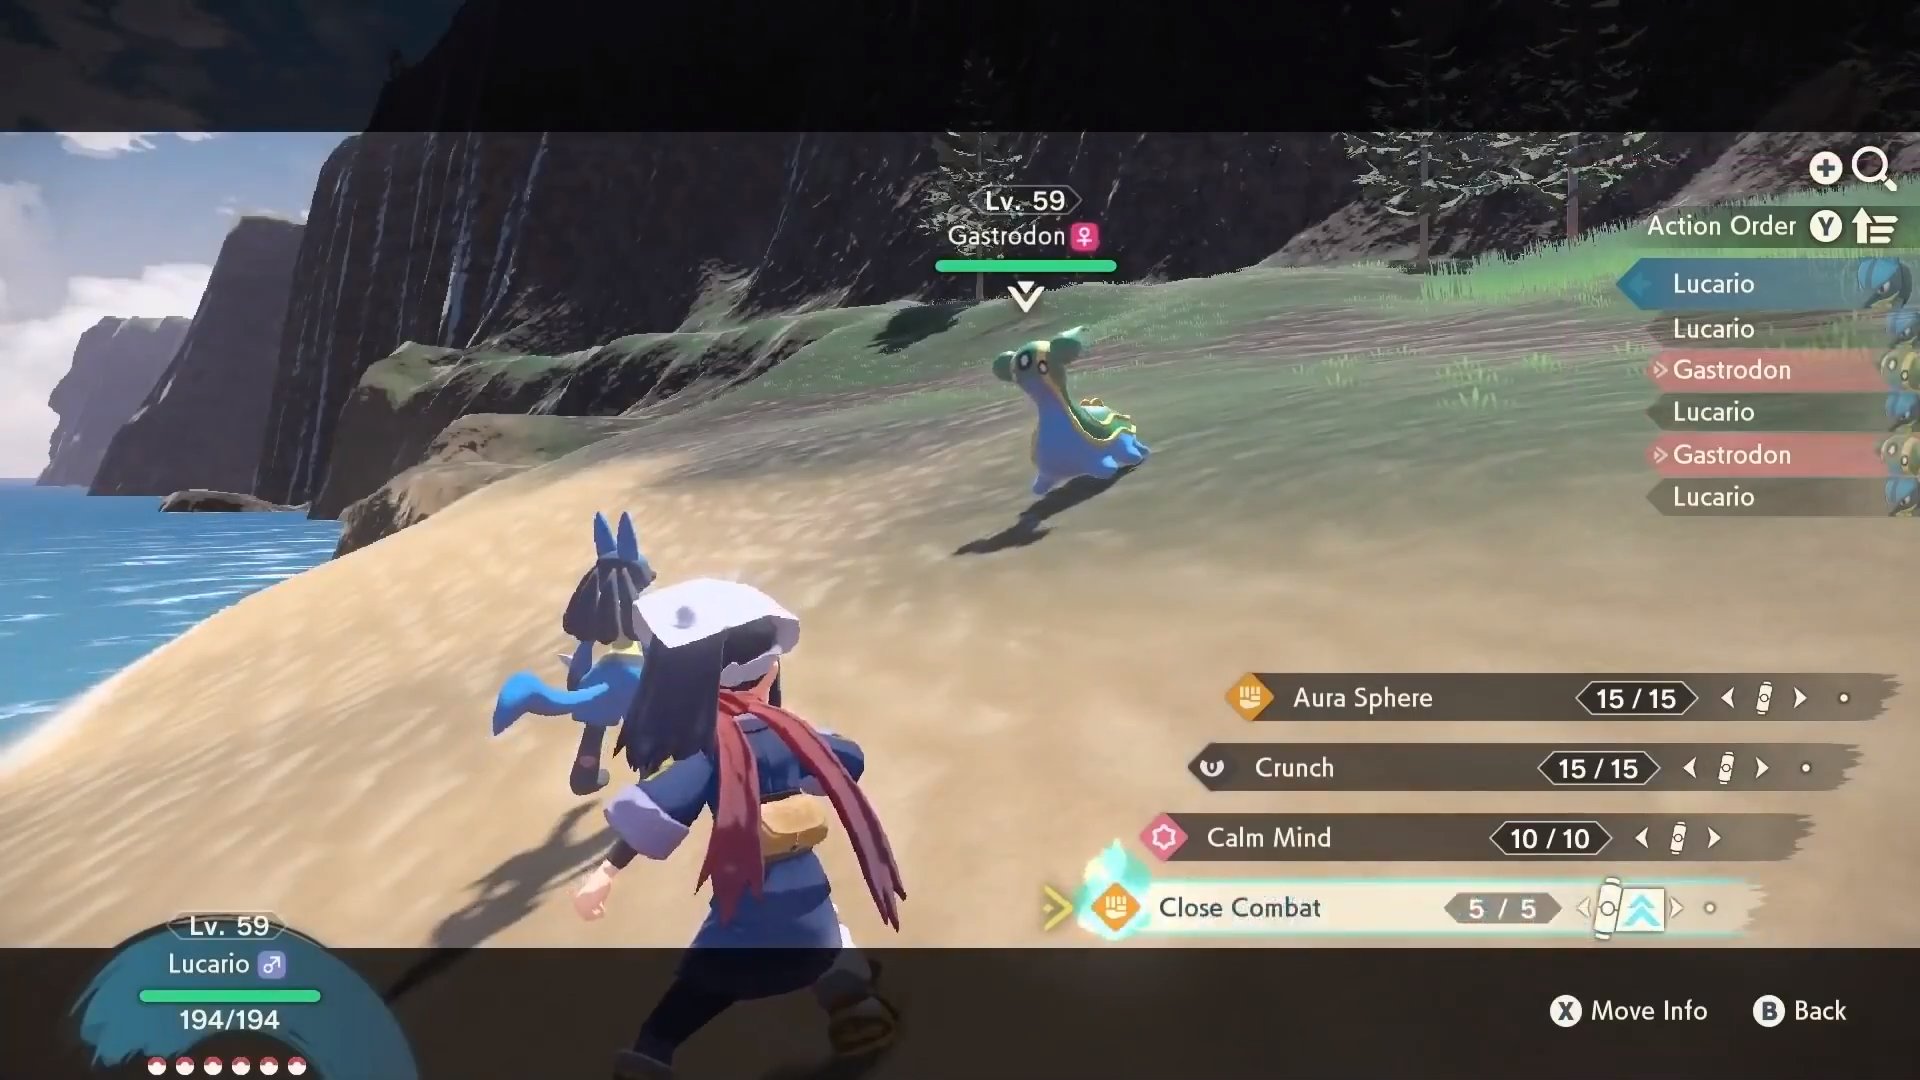 Pokémon Legends: Arceus online features – trading and battling